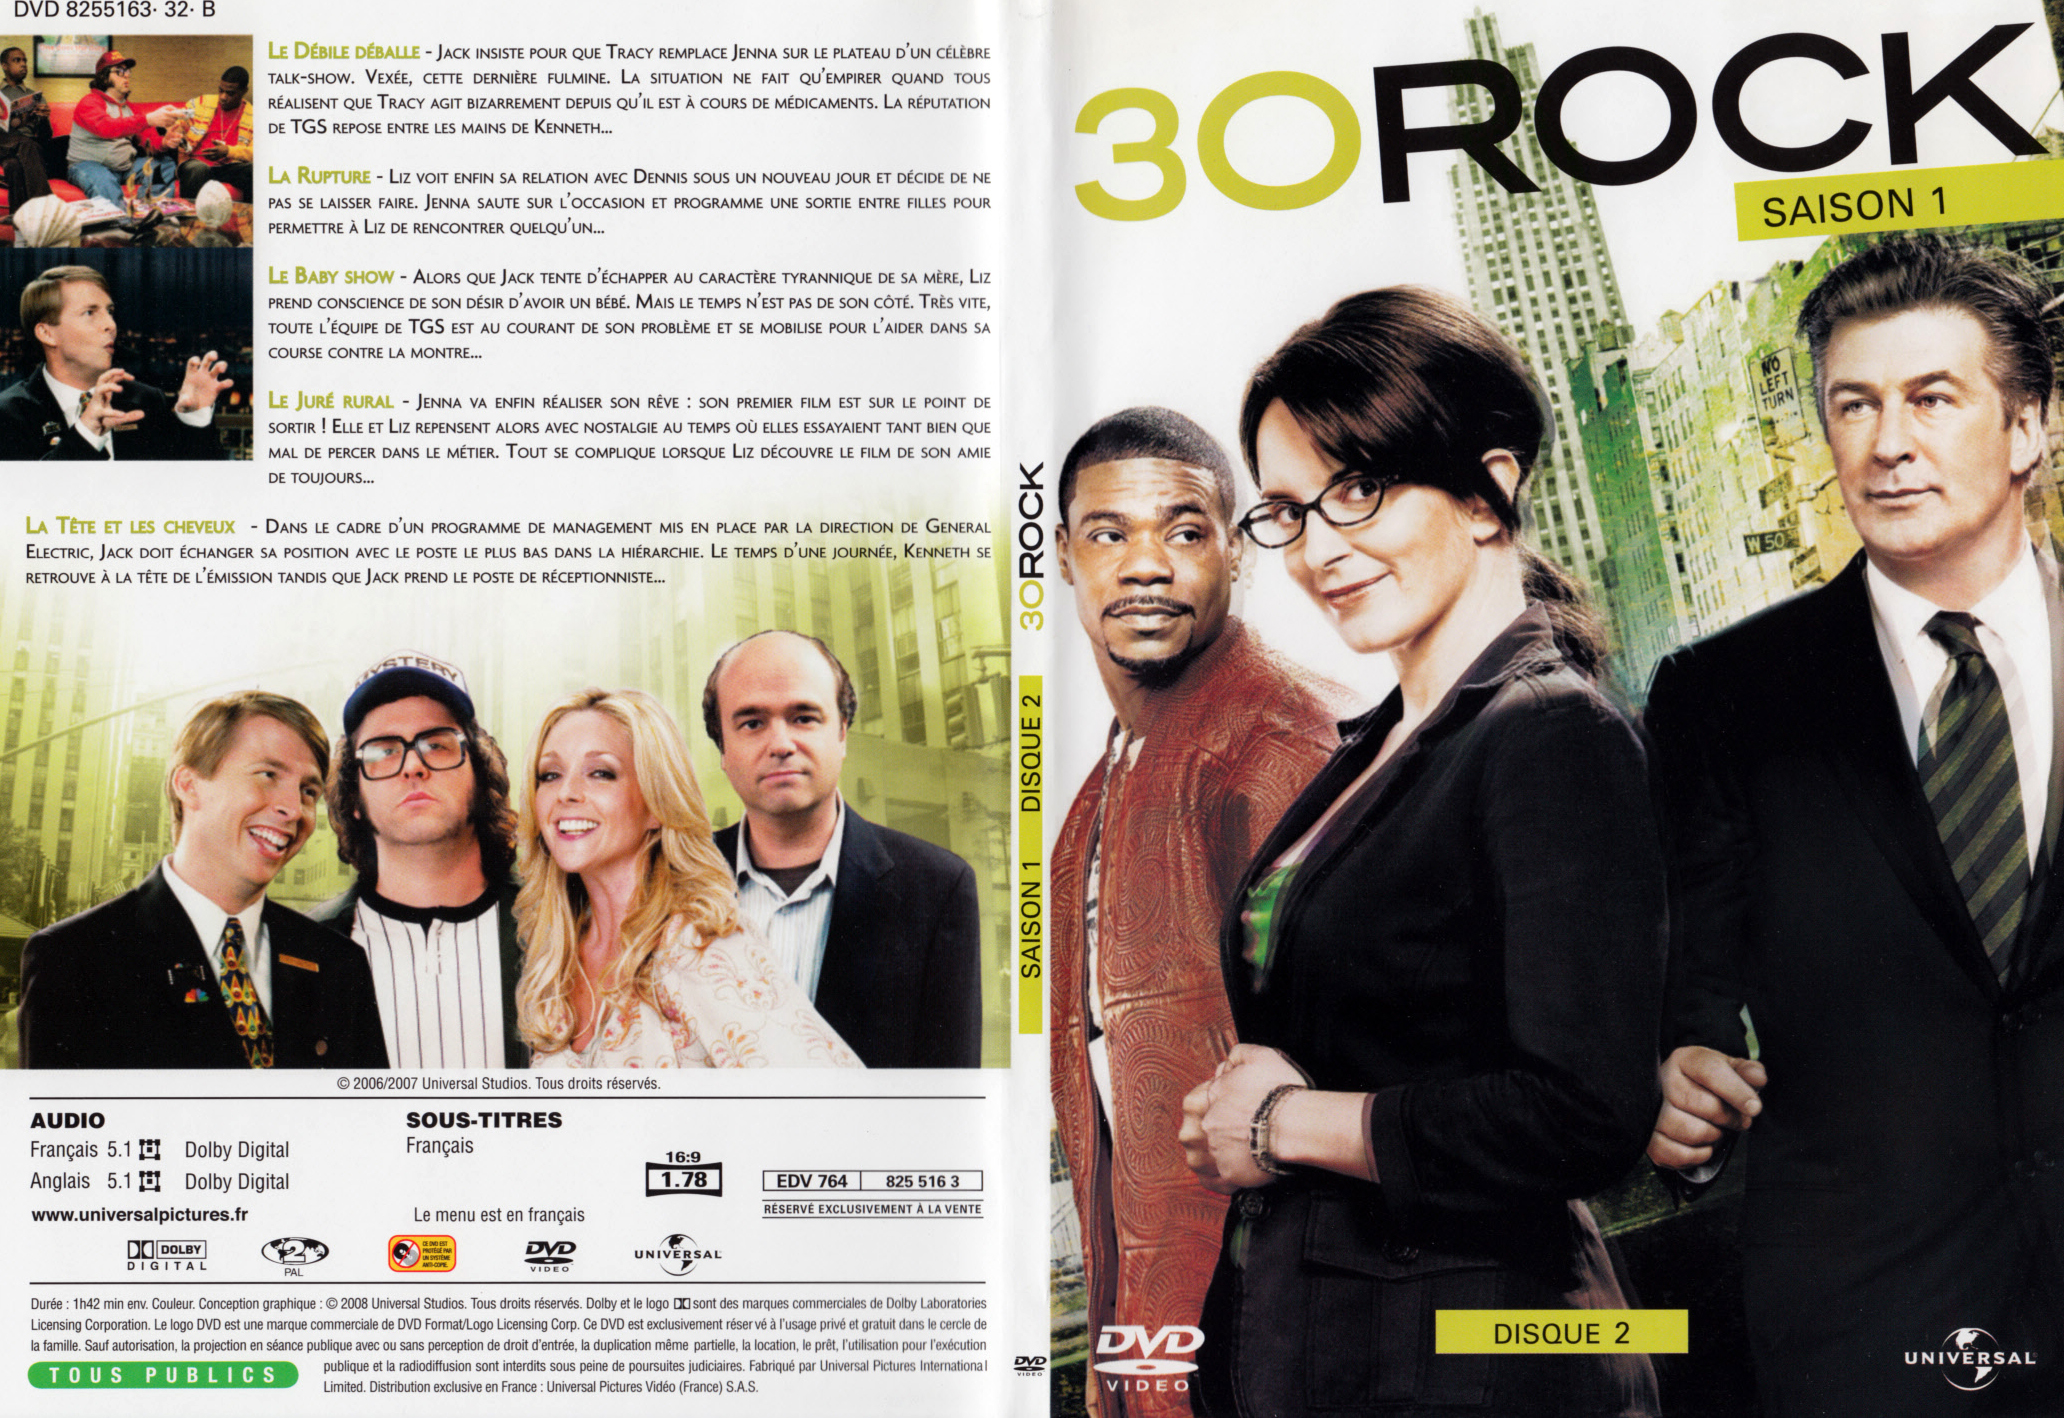 Jaquette DVD 30 Rock Saison 1 DVD 2